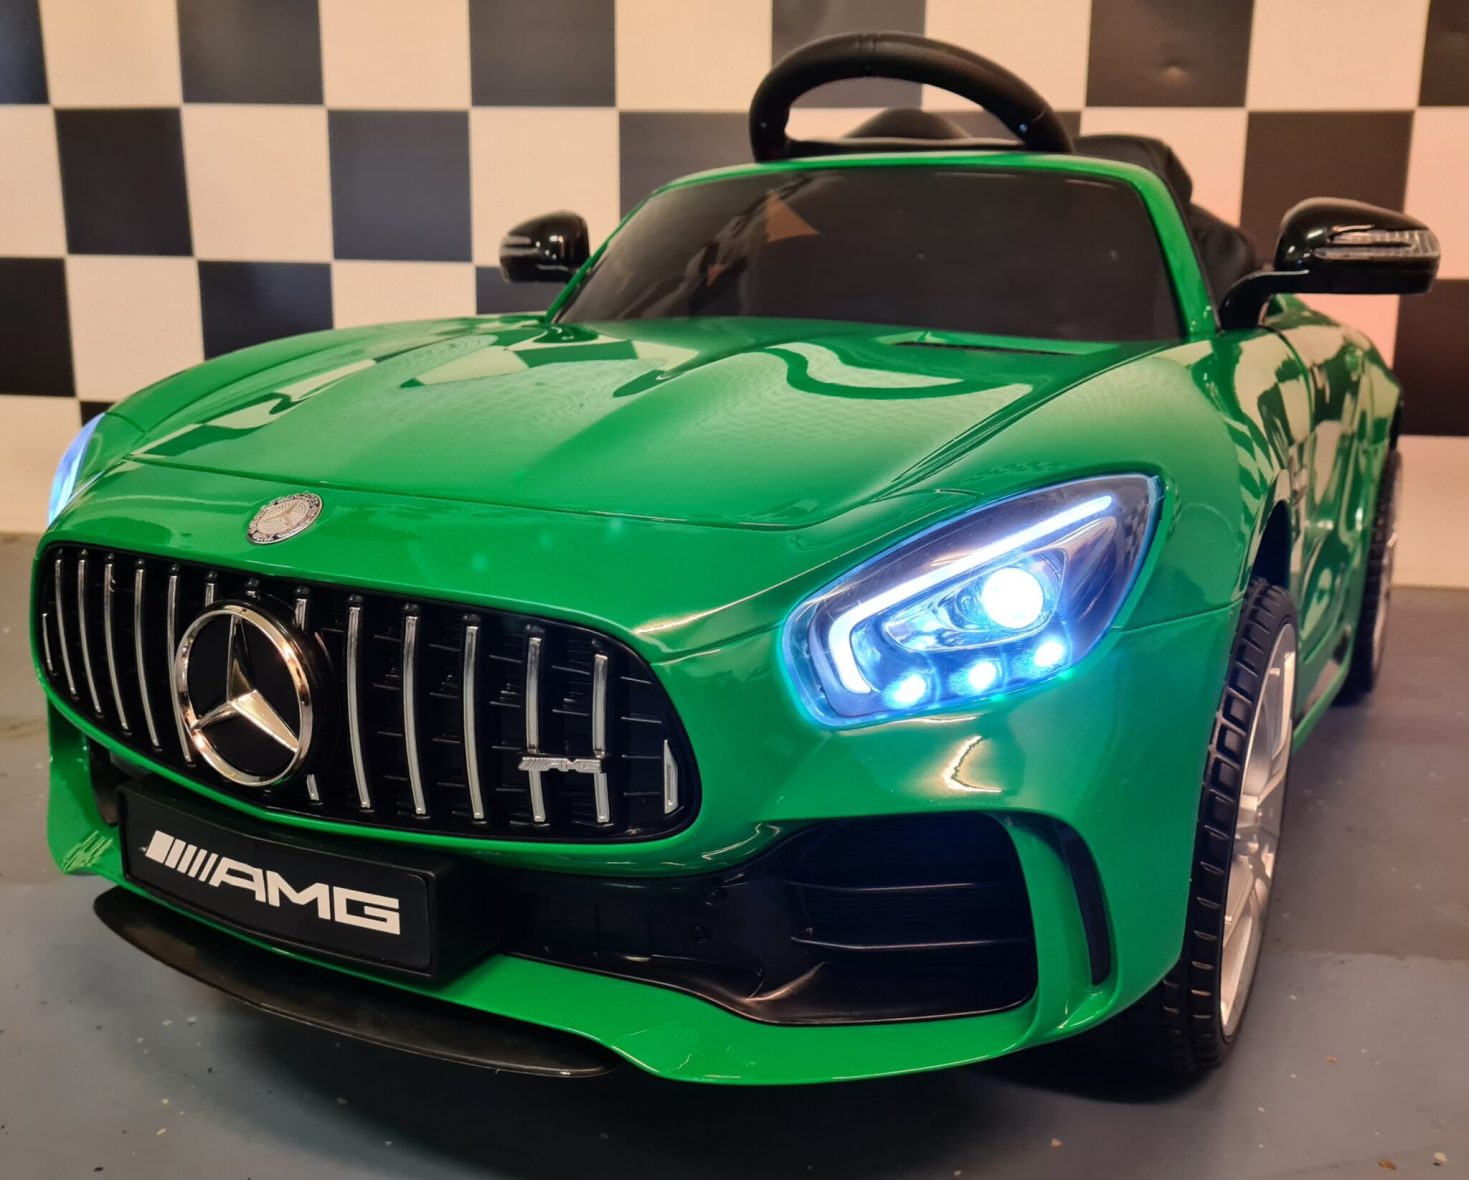 Children’s Car Mercedes Gtr Metallic Green with Rc